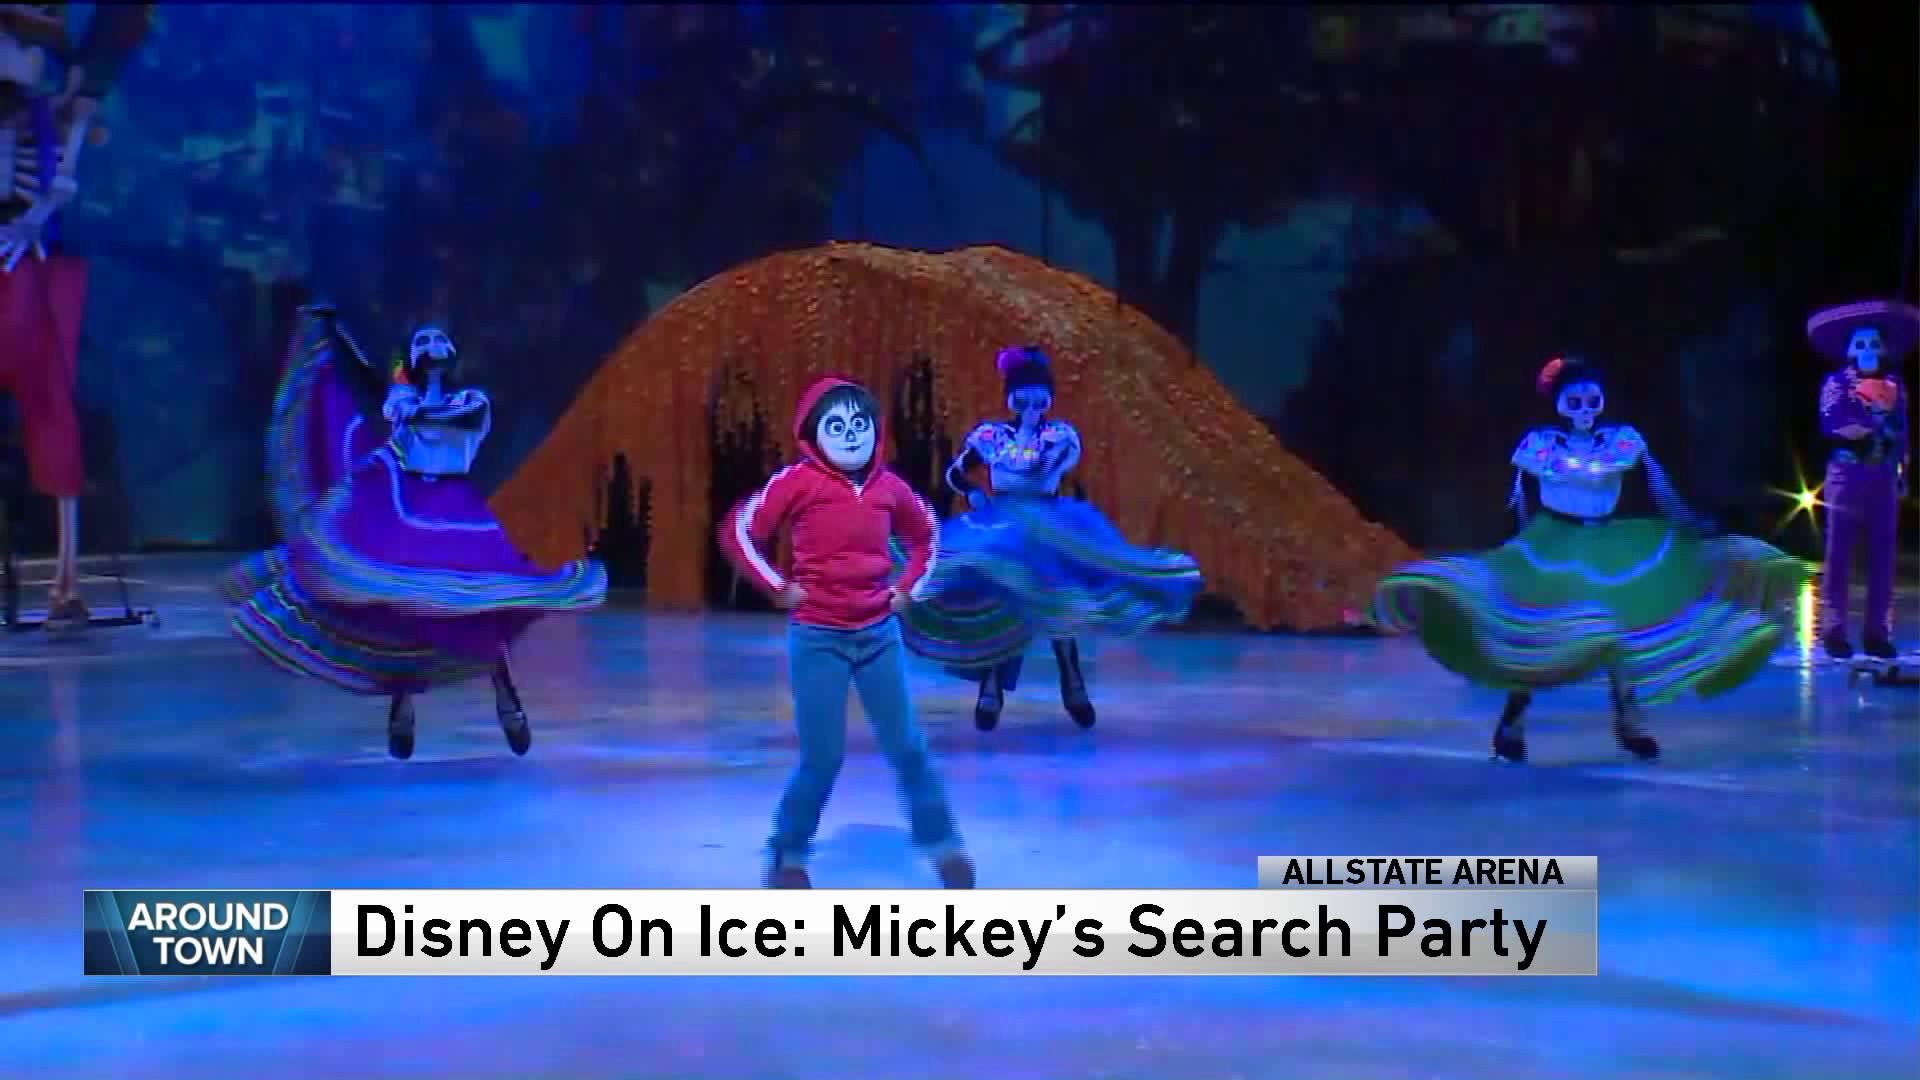 Around Town skates around with Disney On Ice: Mickey’s Search Party